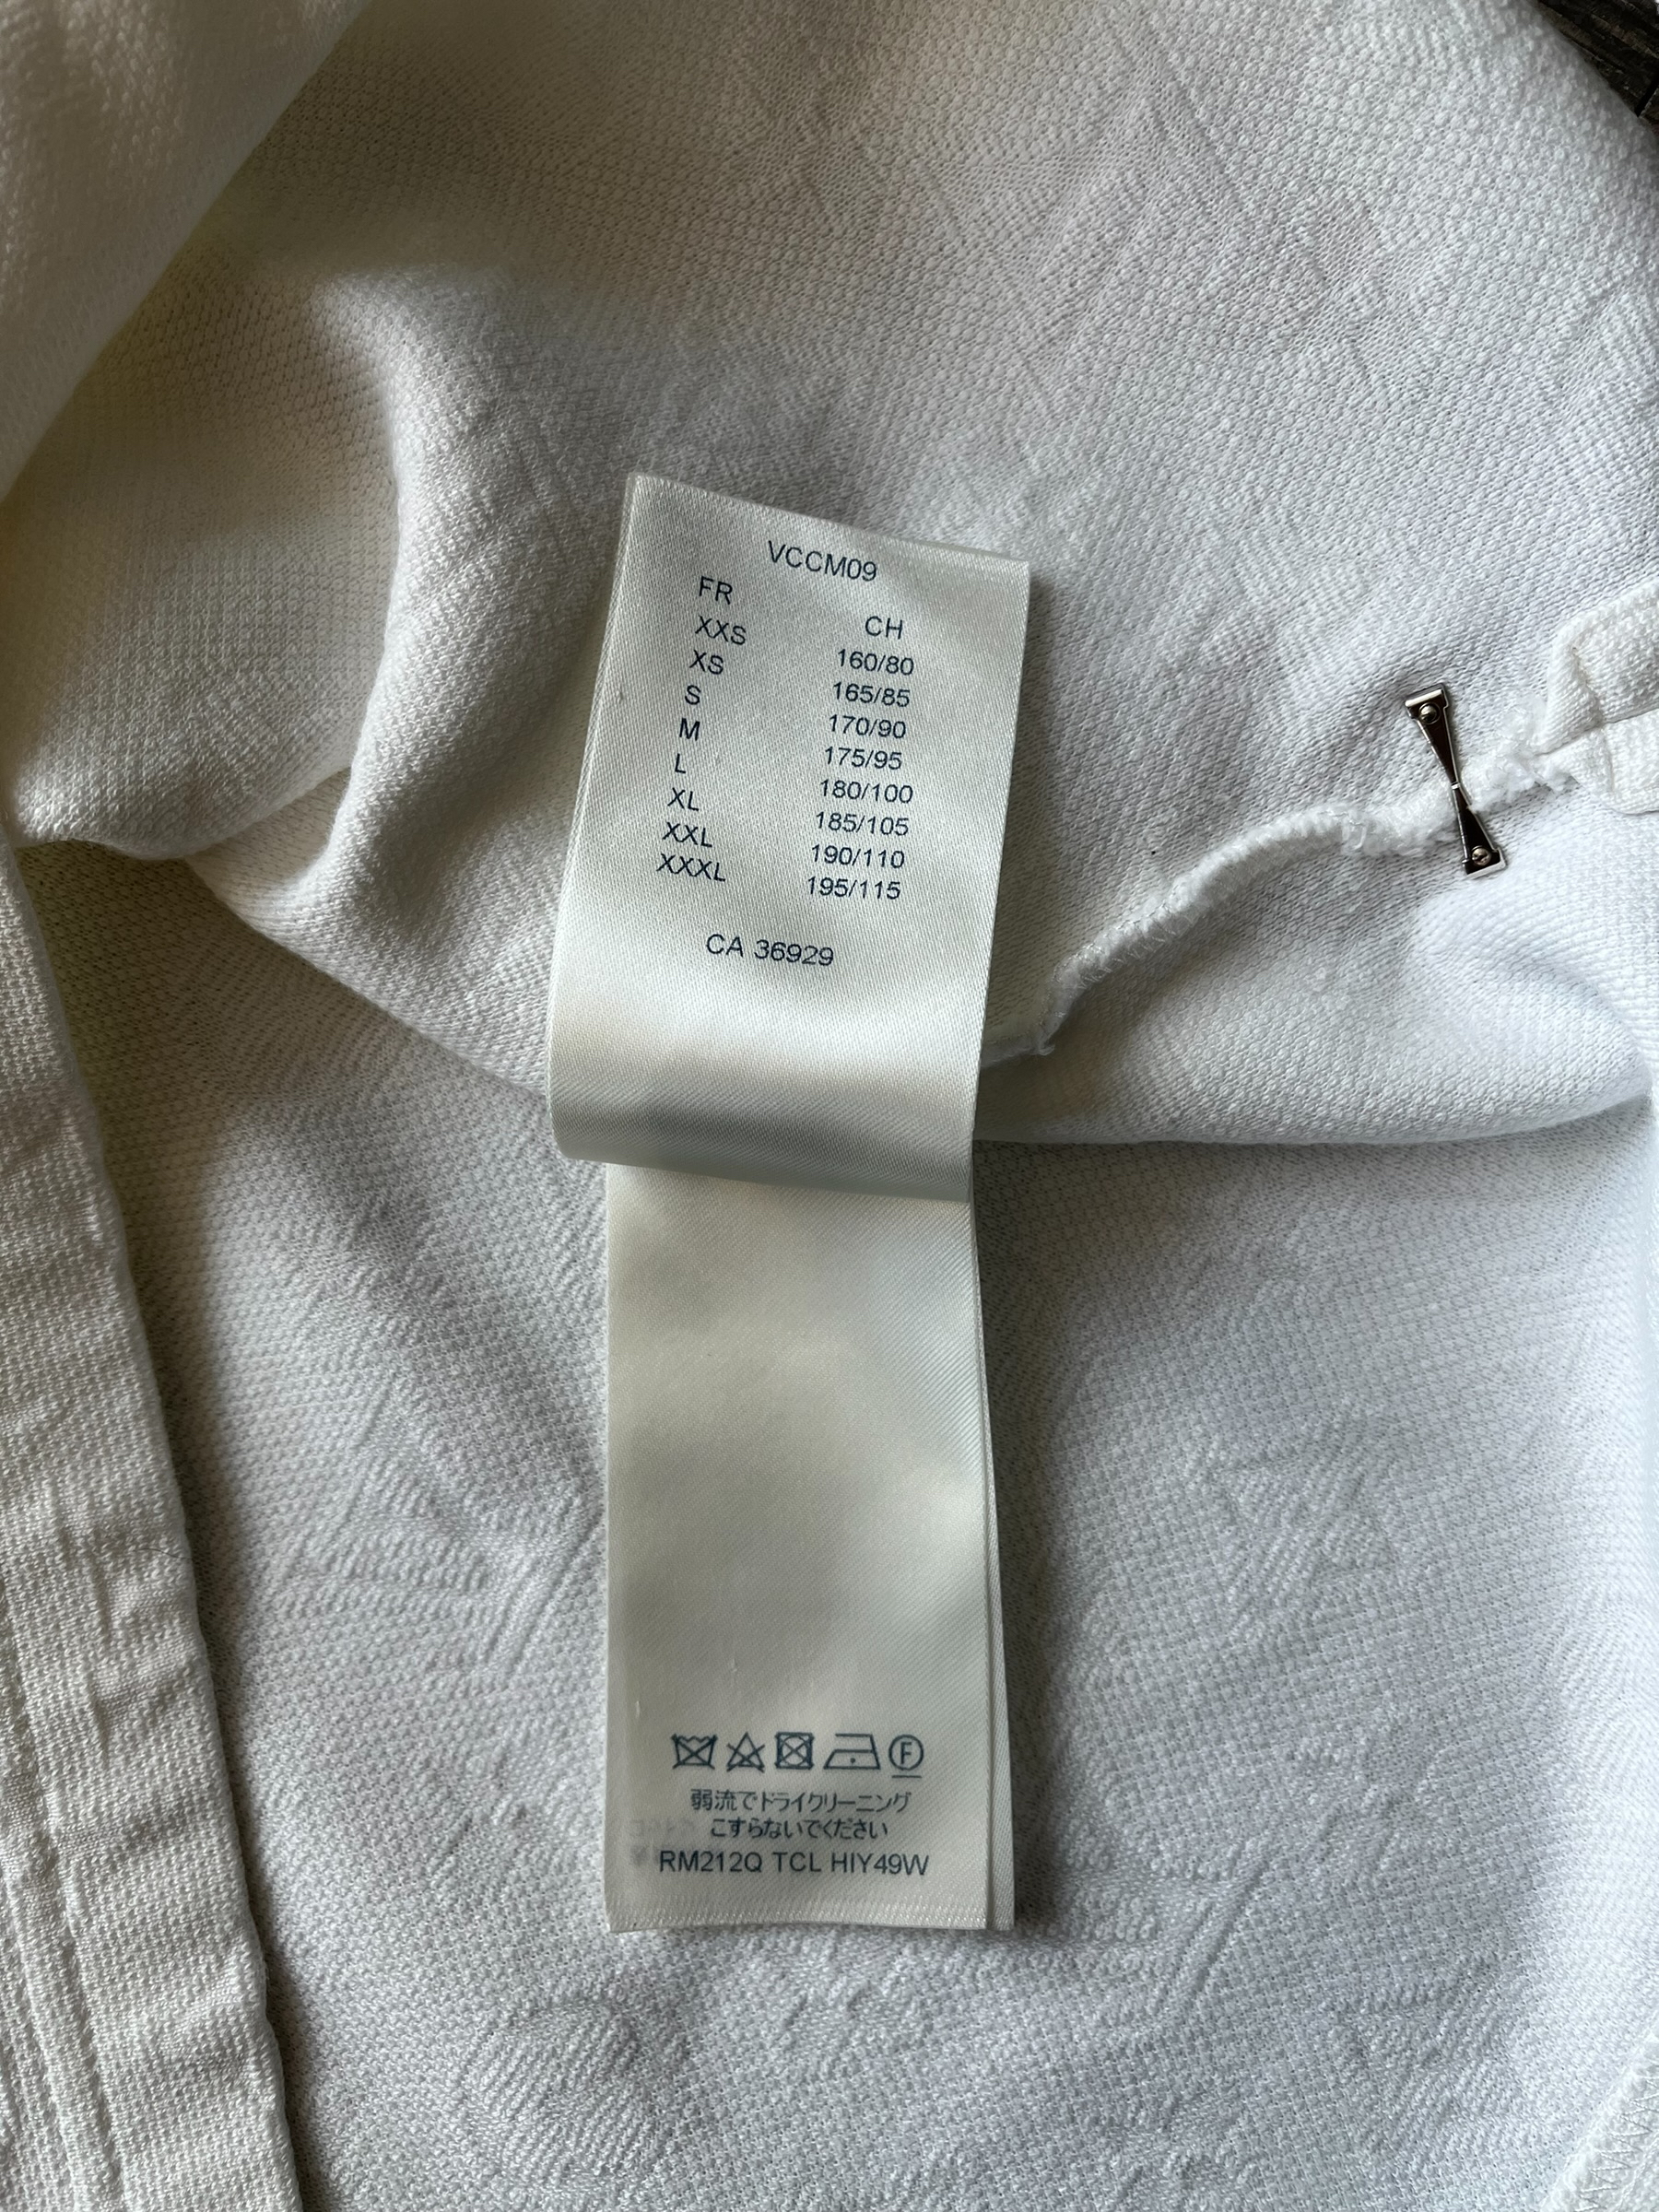 LOUIS VUITTON Monogram Pocket T-Shirt XS - Timeless Luxuries